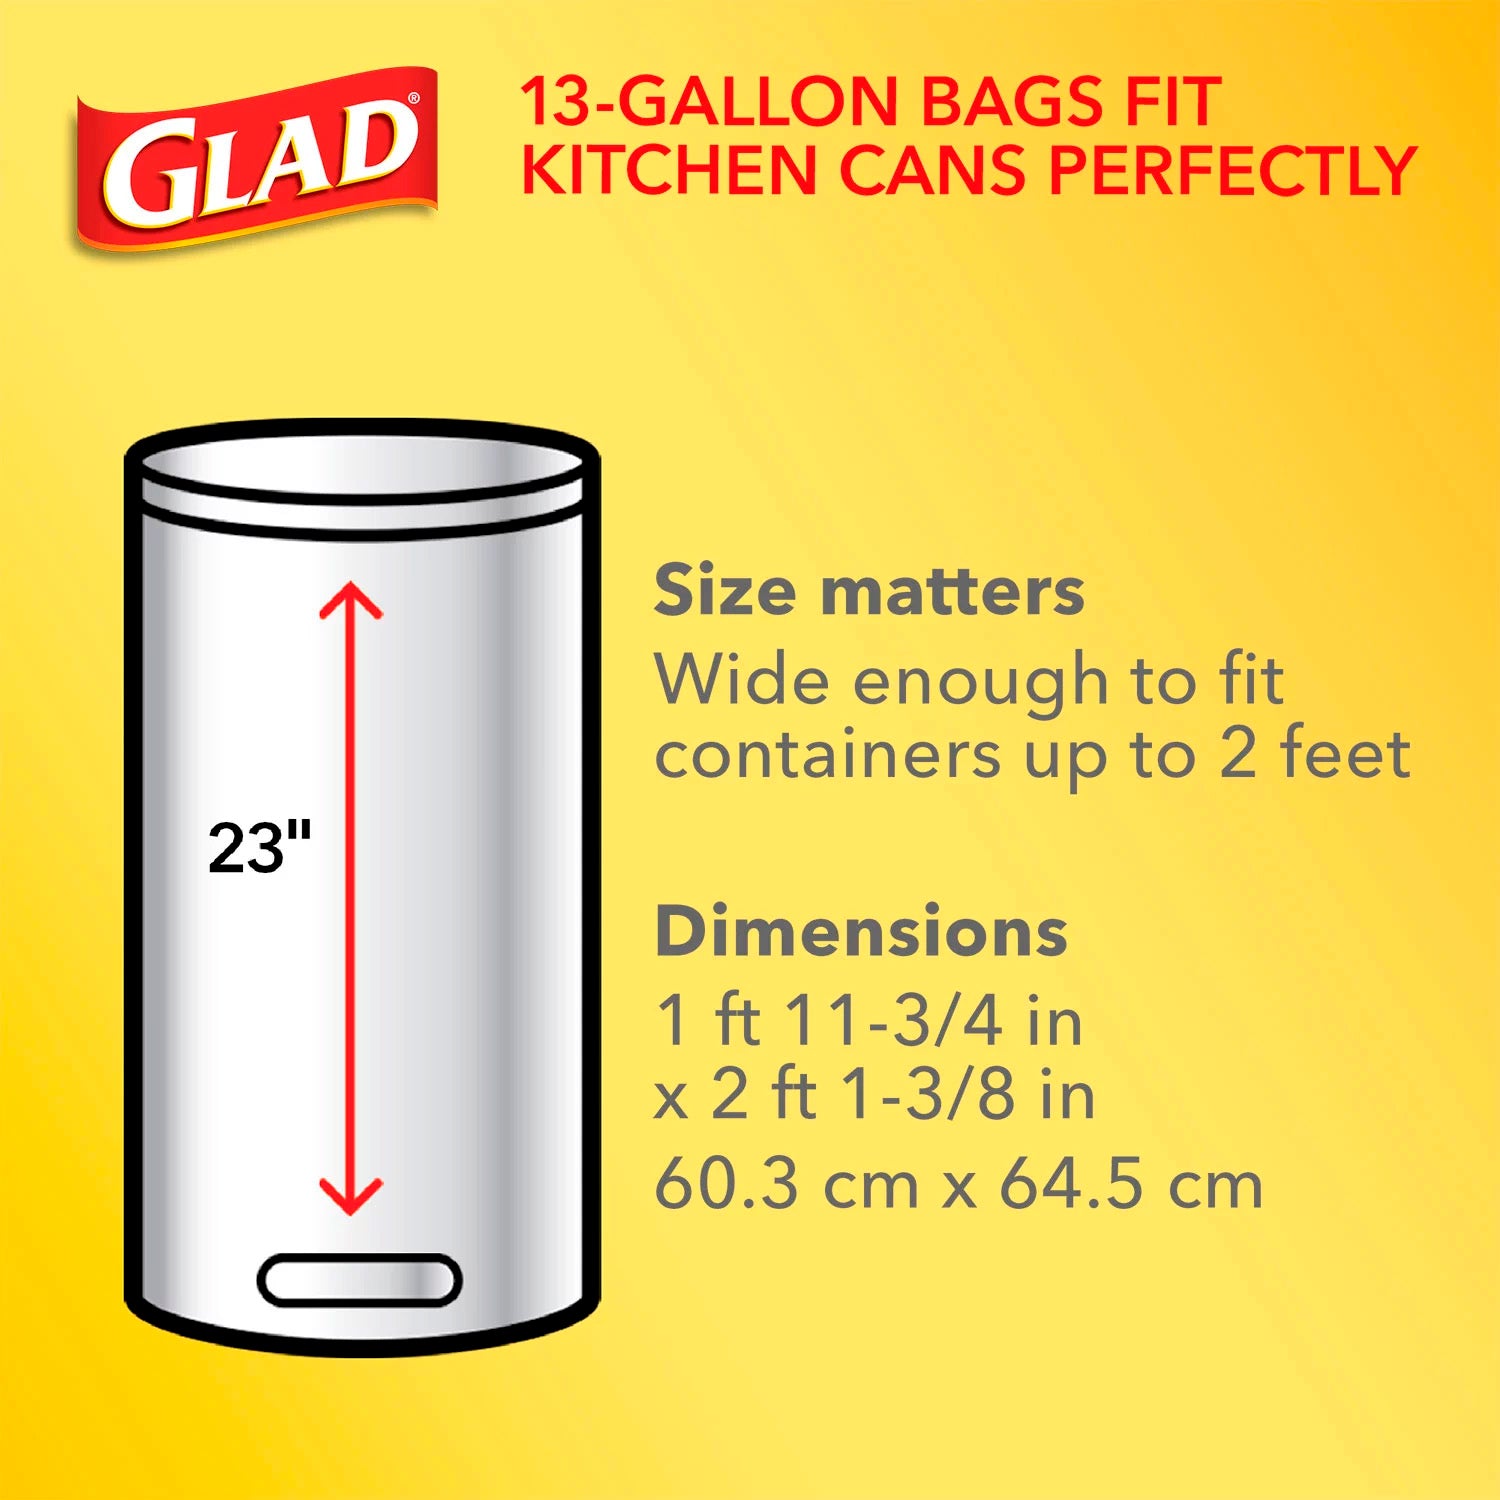 Glad ForceFlex Tall Kitchen Drawstring Trash Bags 13 Gallon Trash